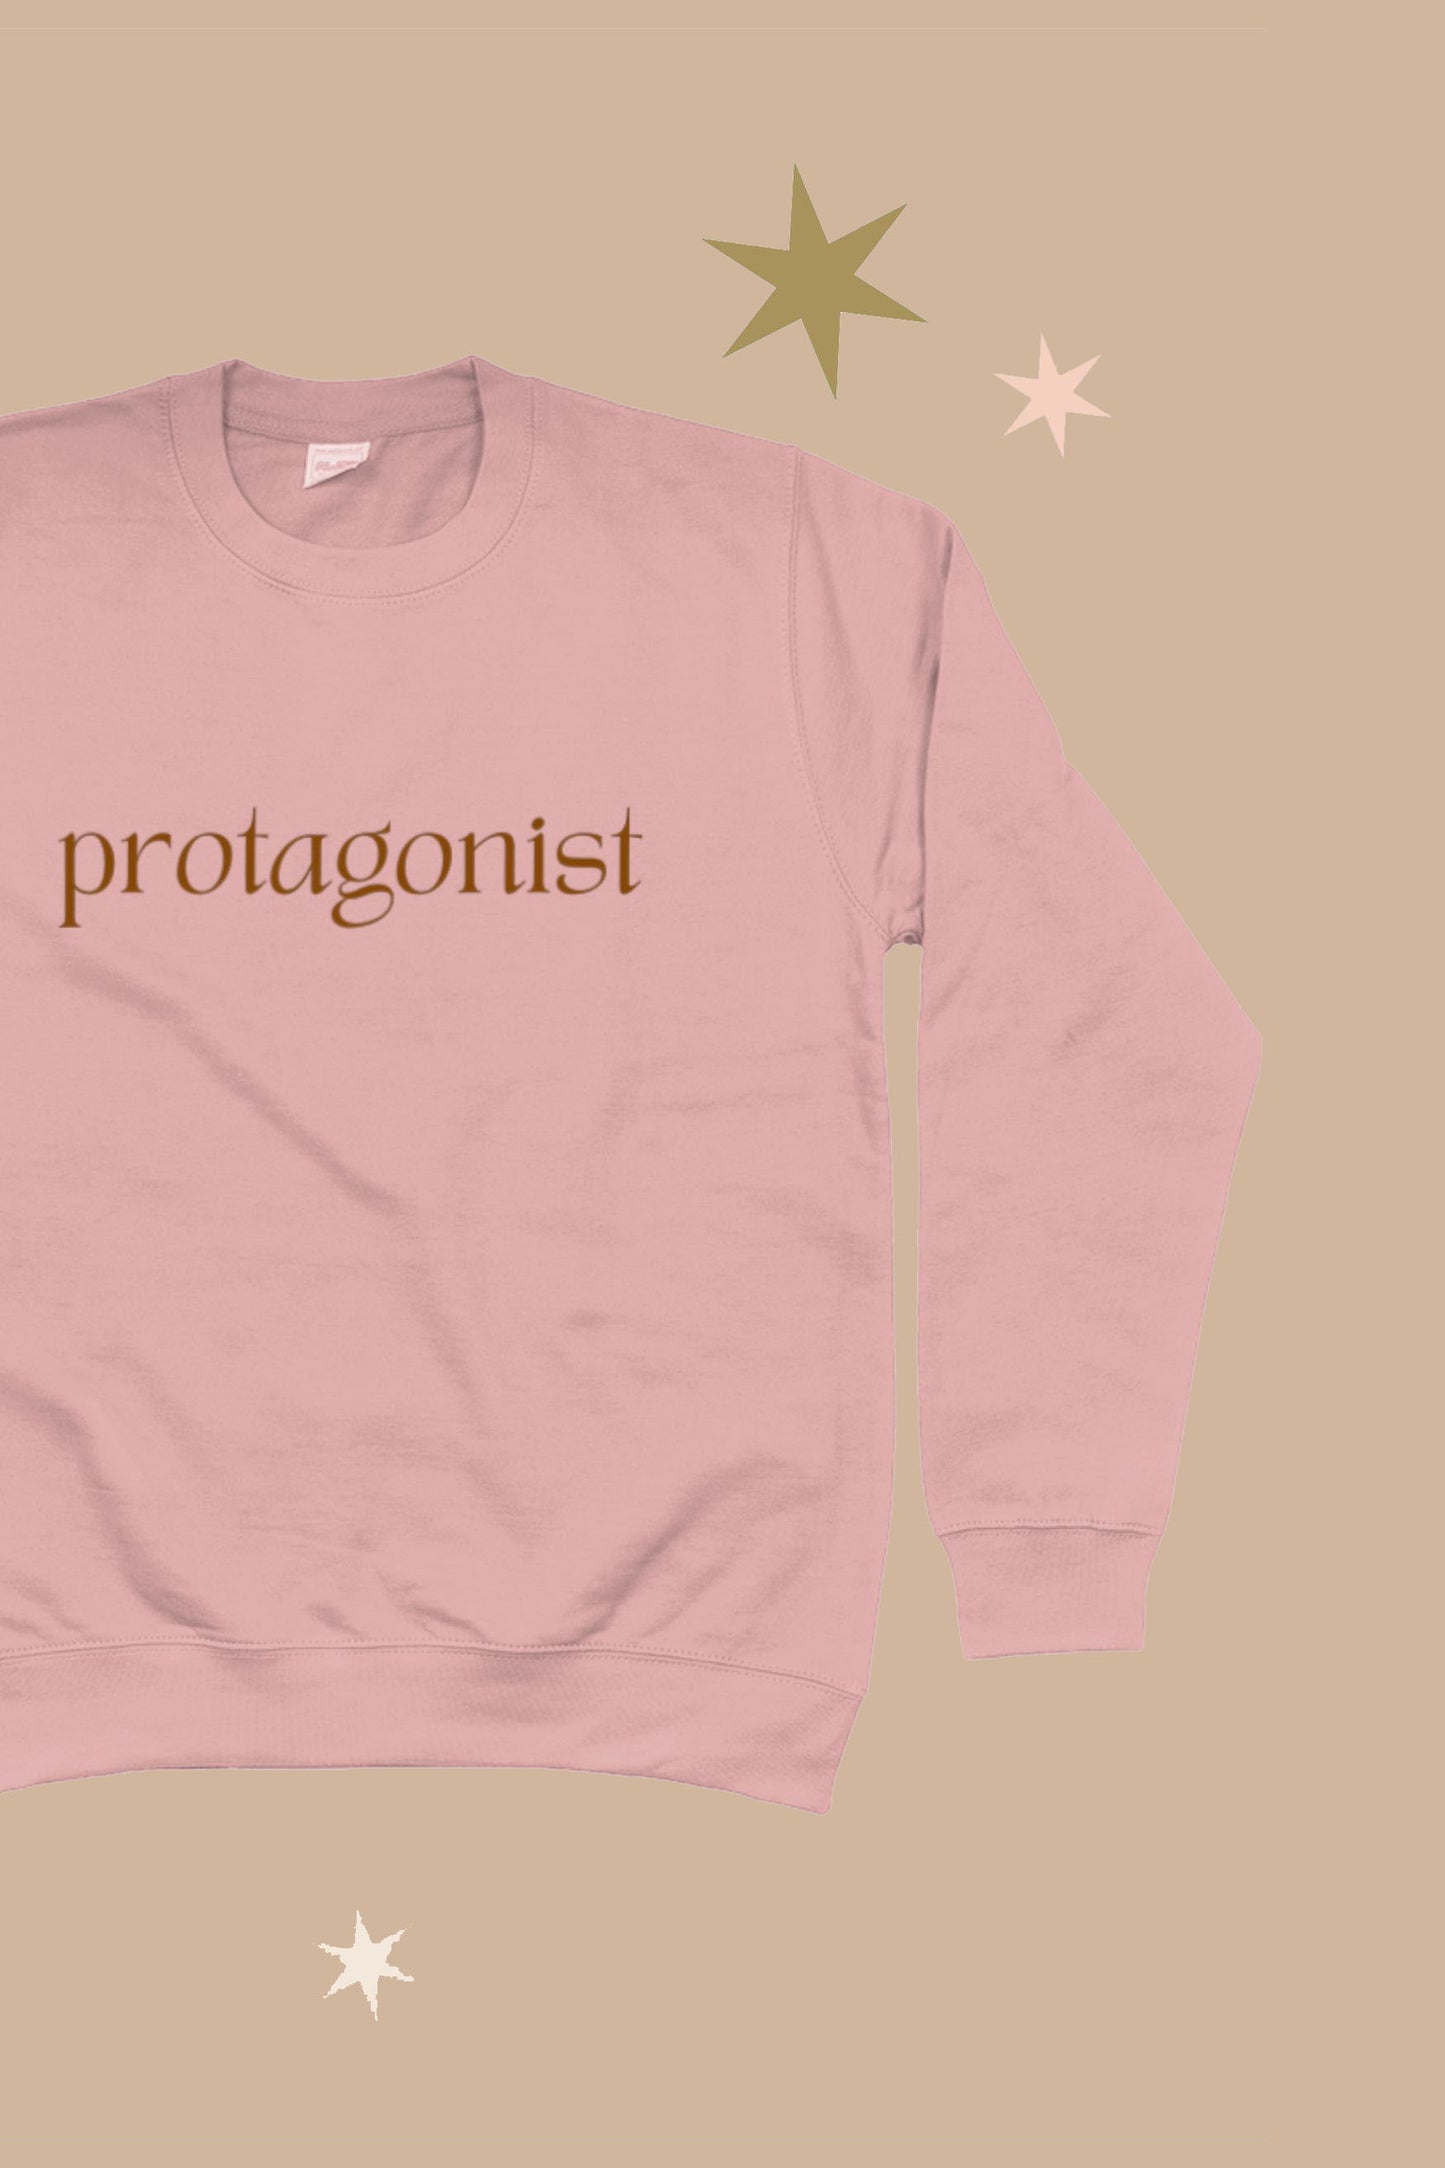 'Protagonist' Bookclub Sweatshirt